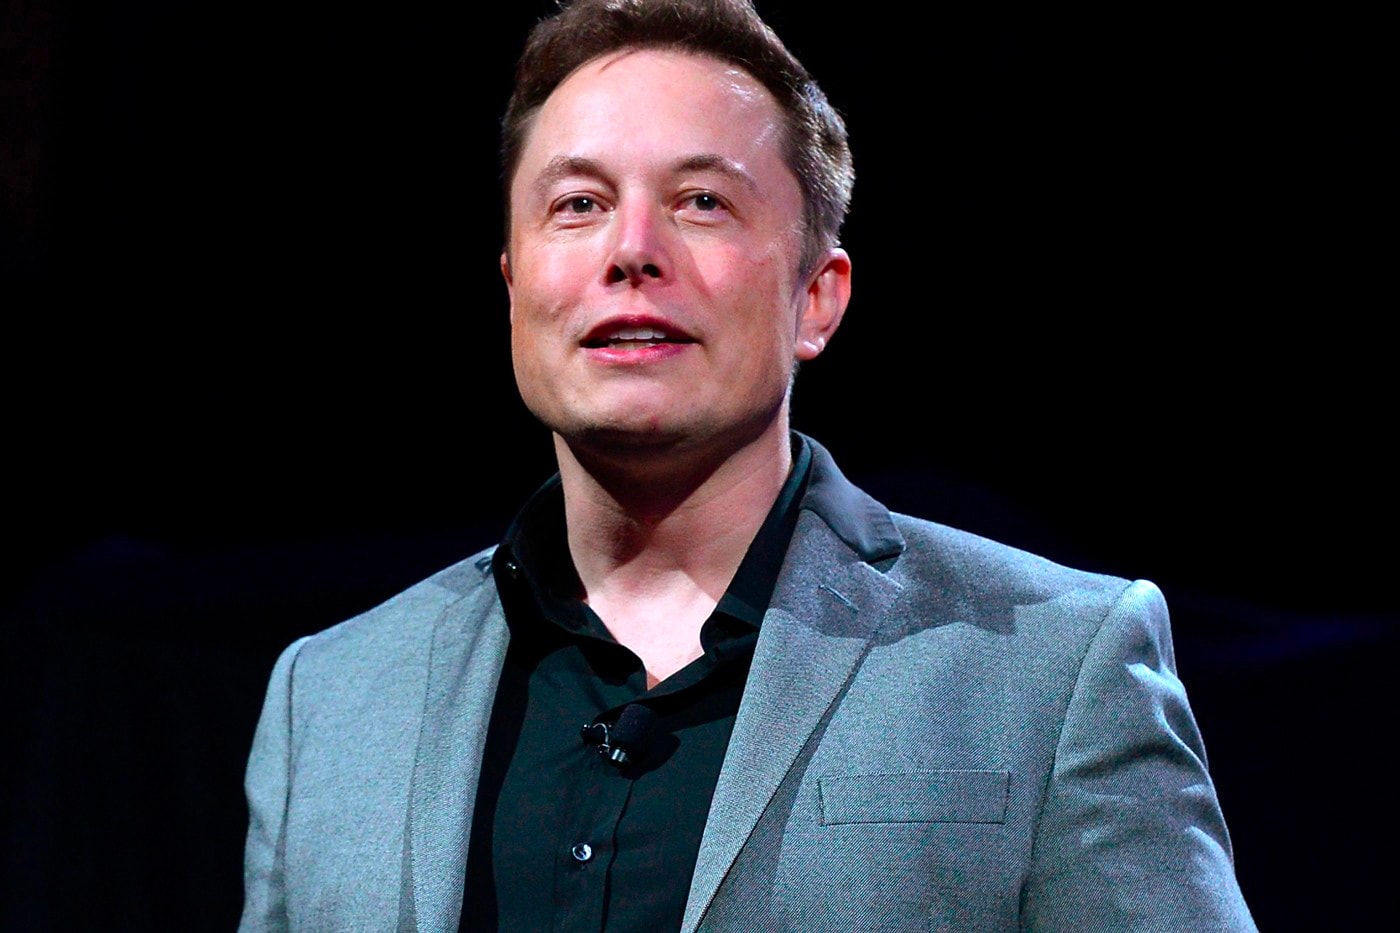 Elon Musk Techno NFT Release music tech Tesla music cryptocurrency elon musk twitter tweets 